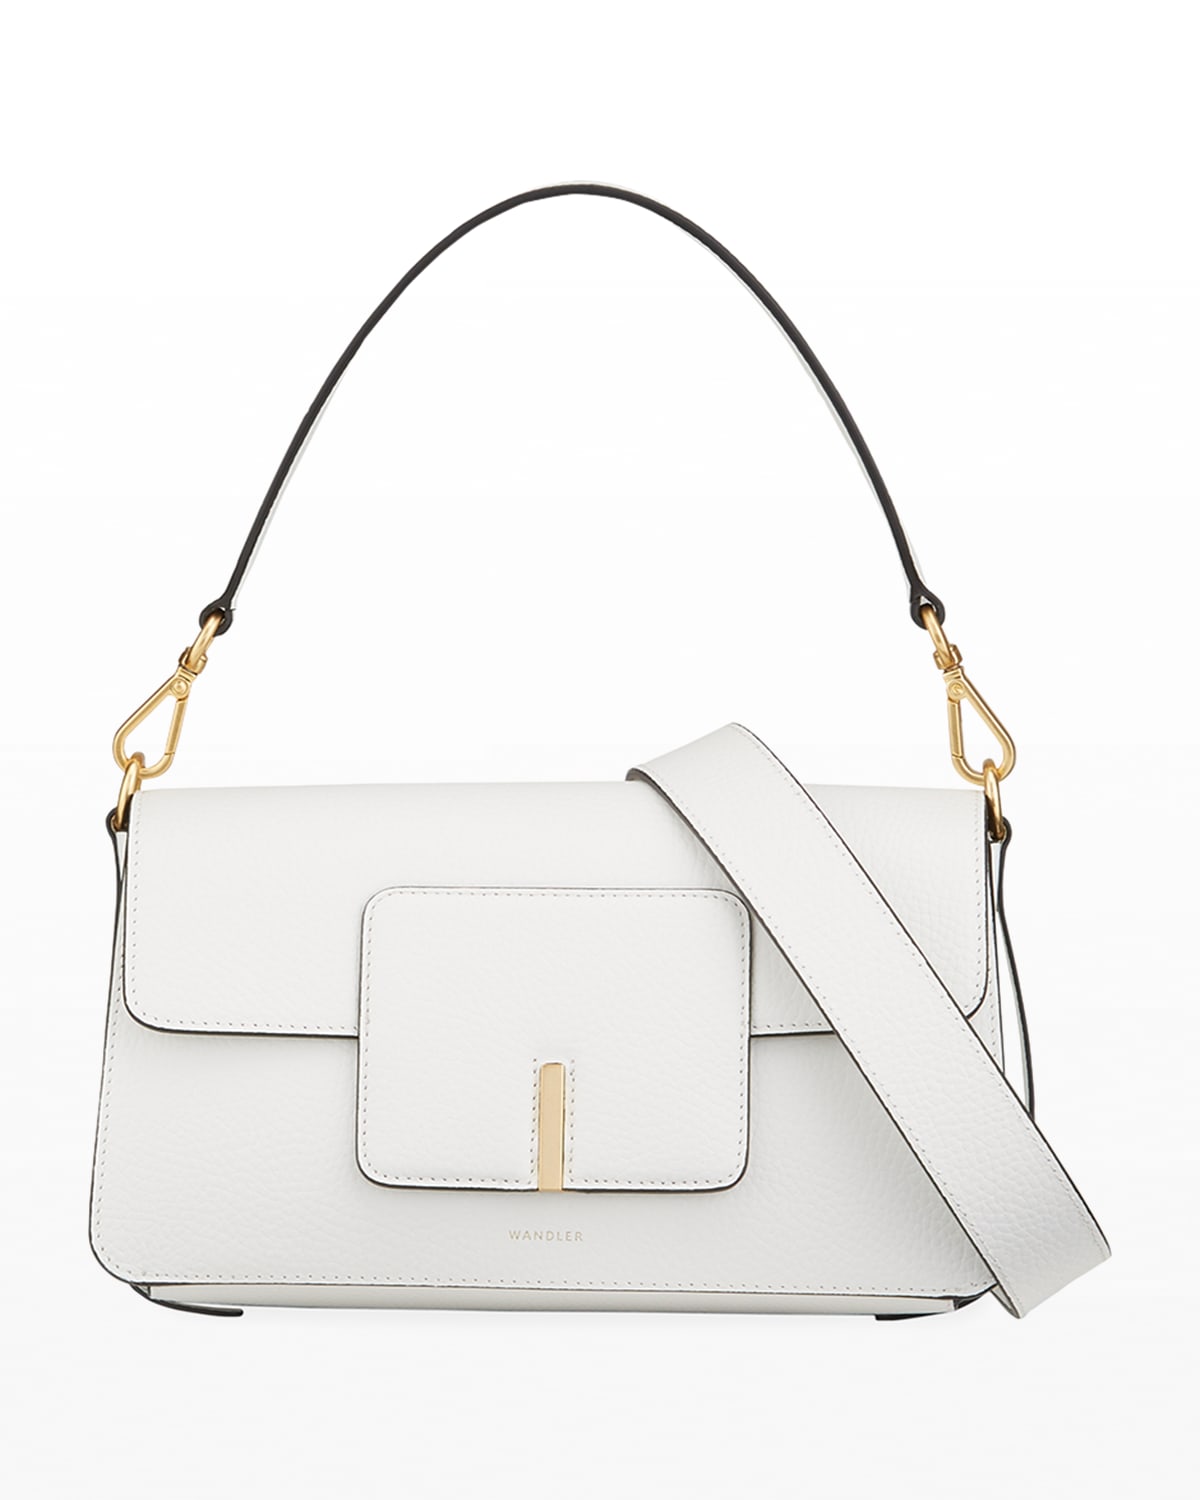 Wandler Penelope Micro Leather Shoulder Bag | Neiman Marcus